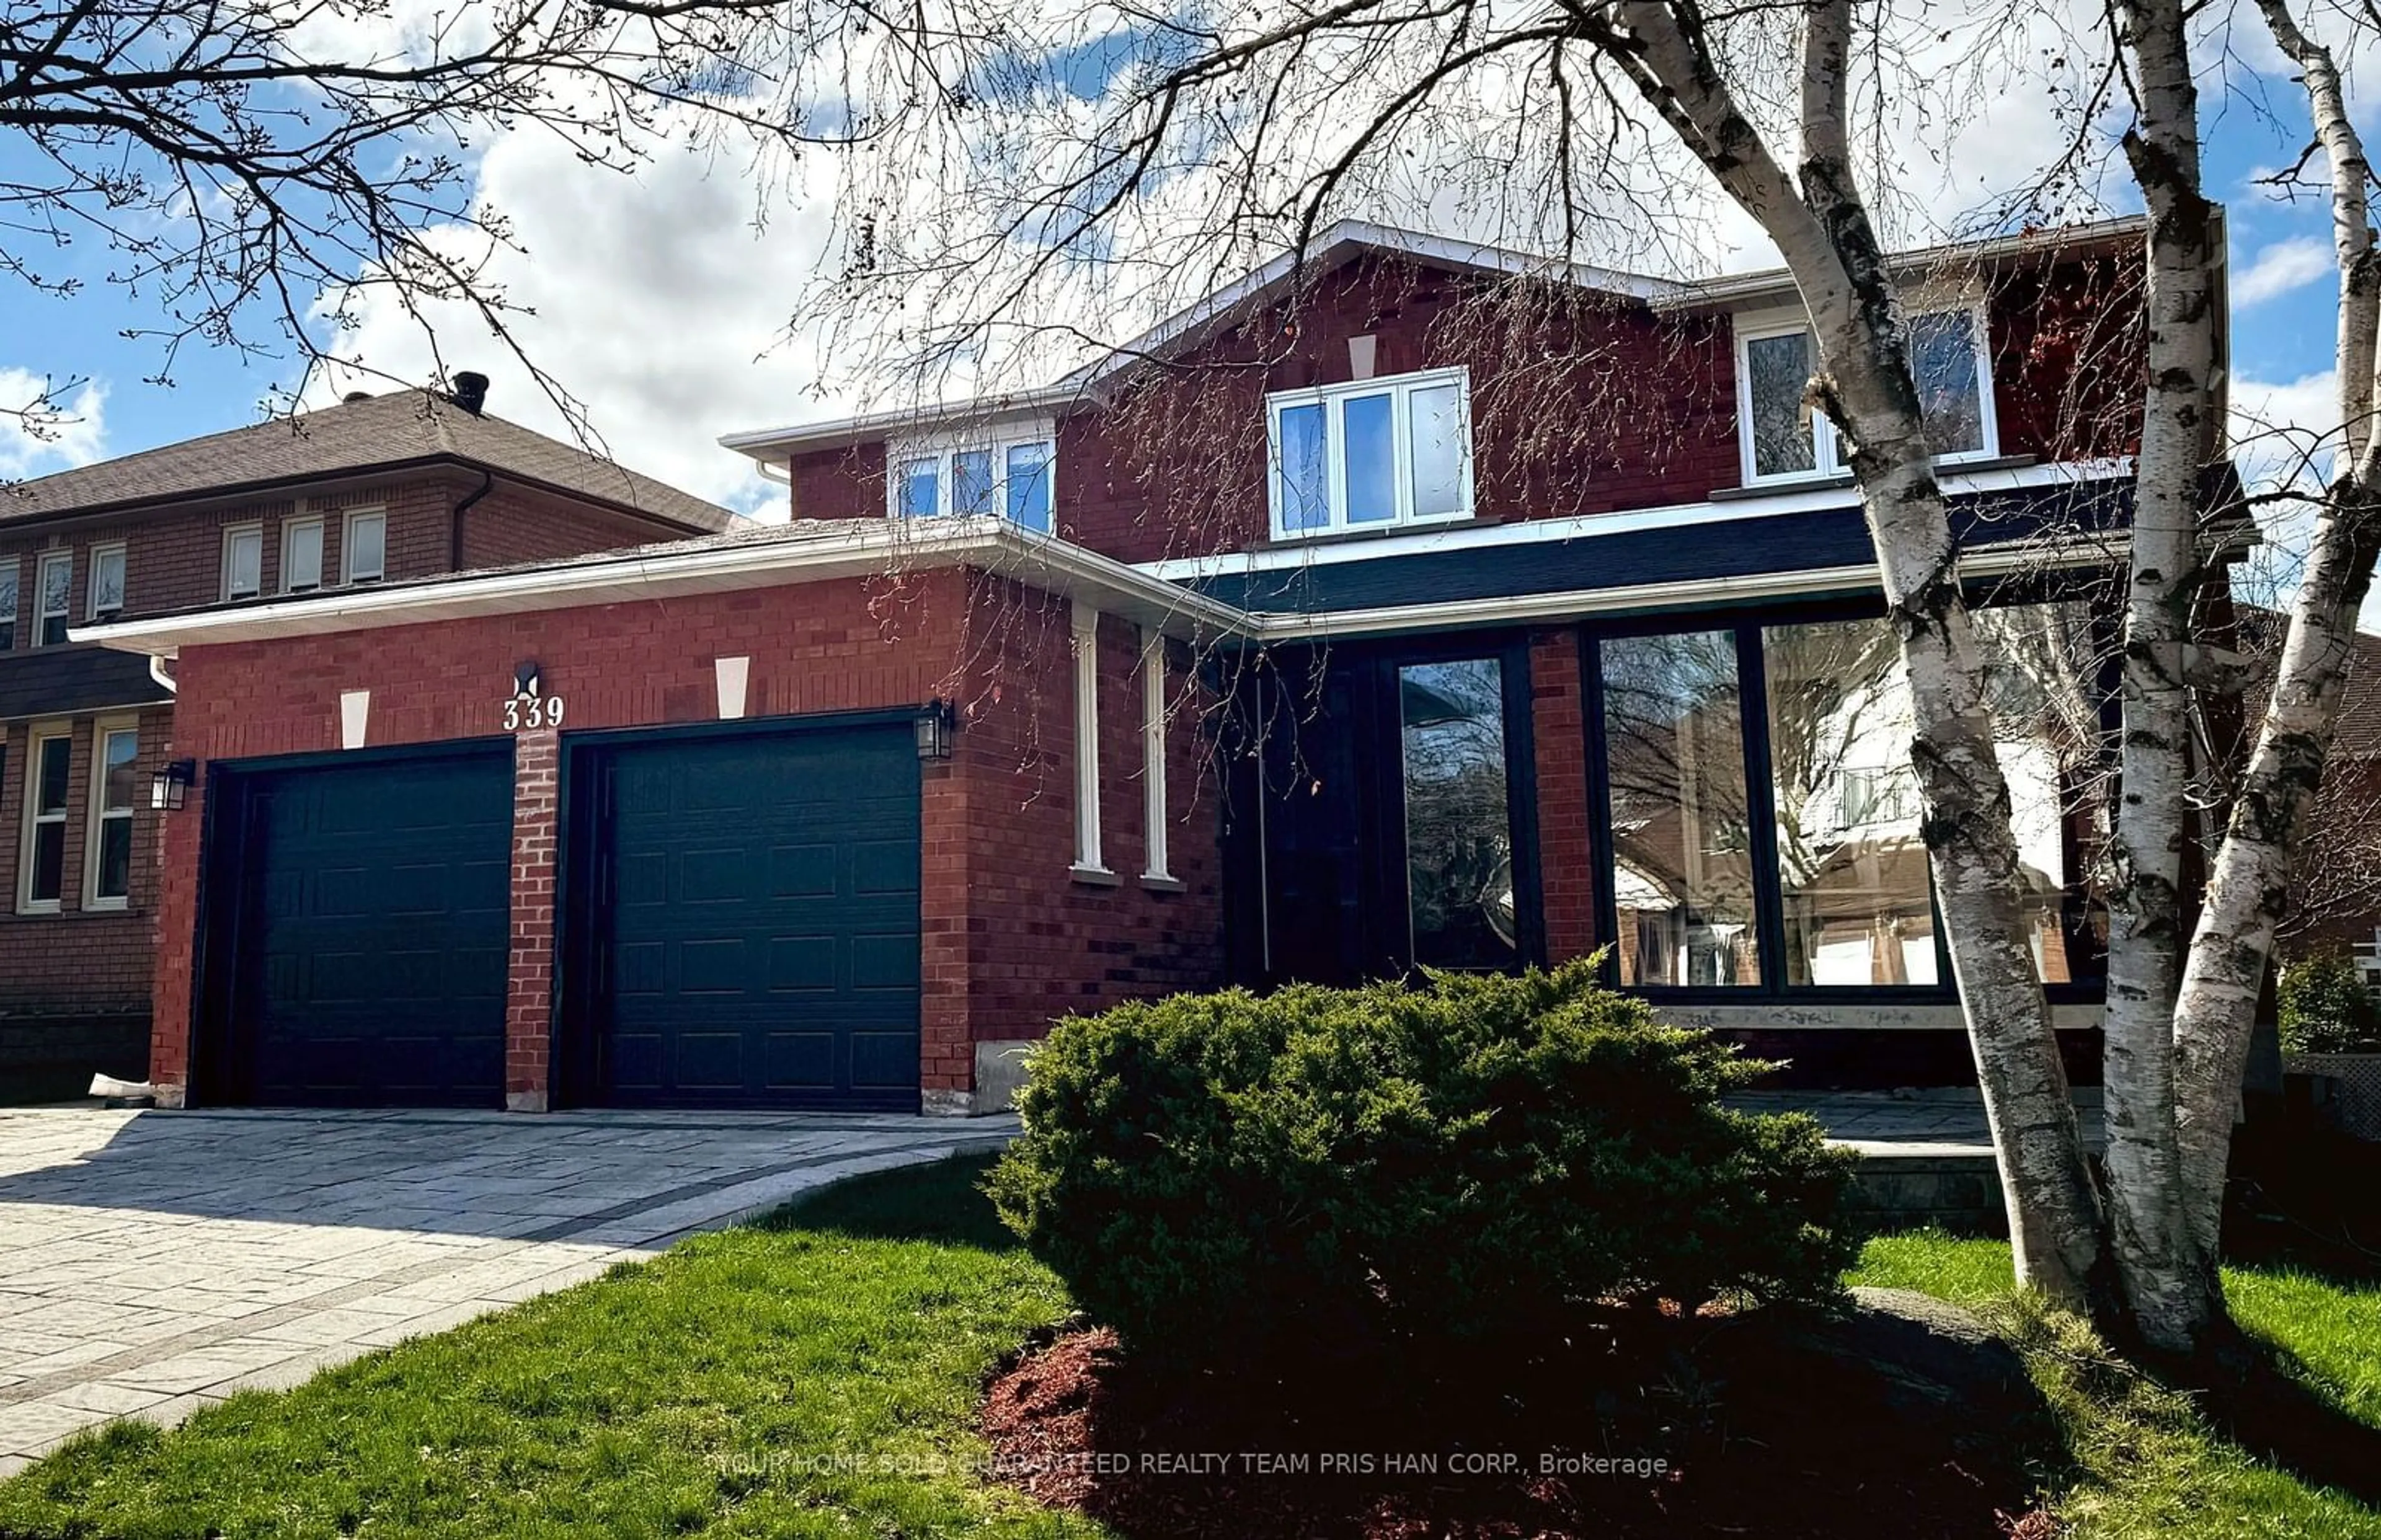 Home with brick exterior material for 339 Manhattan Dr, Markham Ontario L3P 7L7